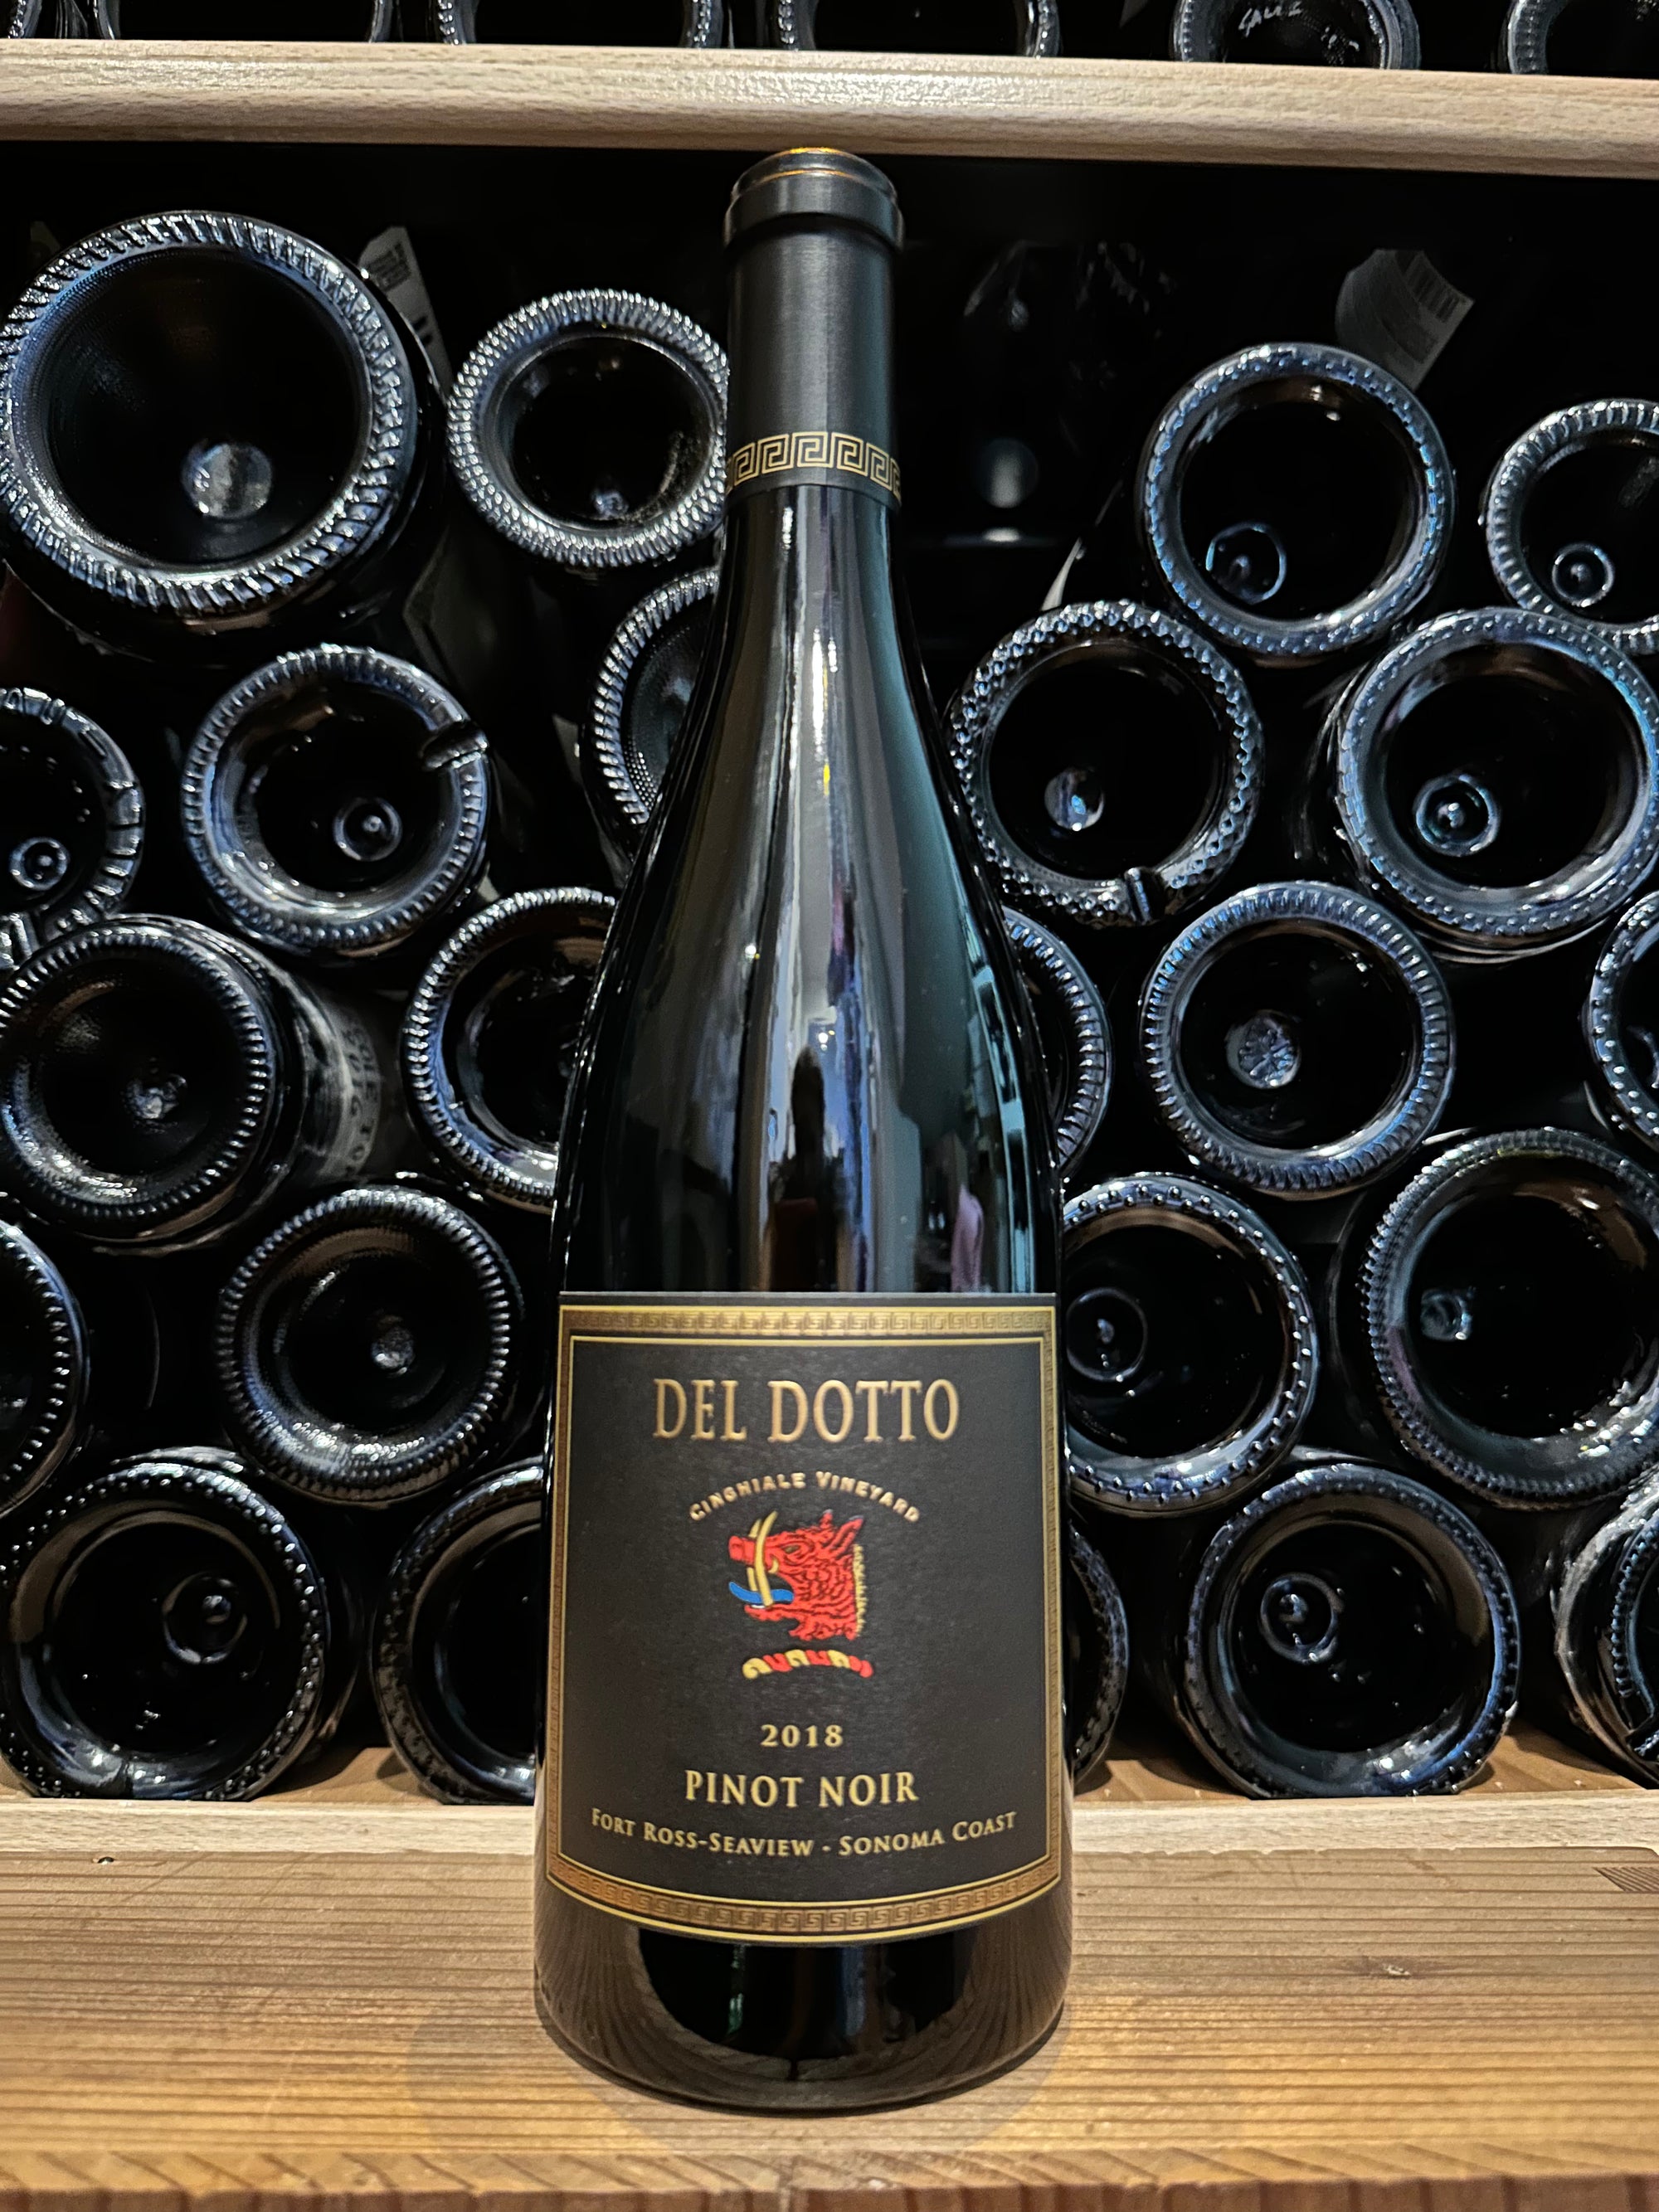 Del Dotto Pinot Noir Cinghiale Vineyard Sonoma Coast 2018